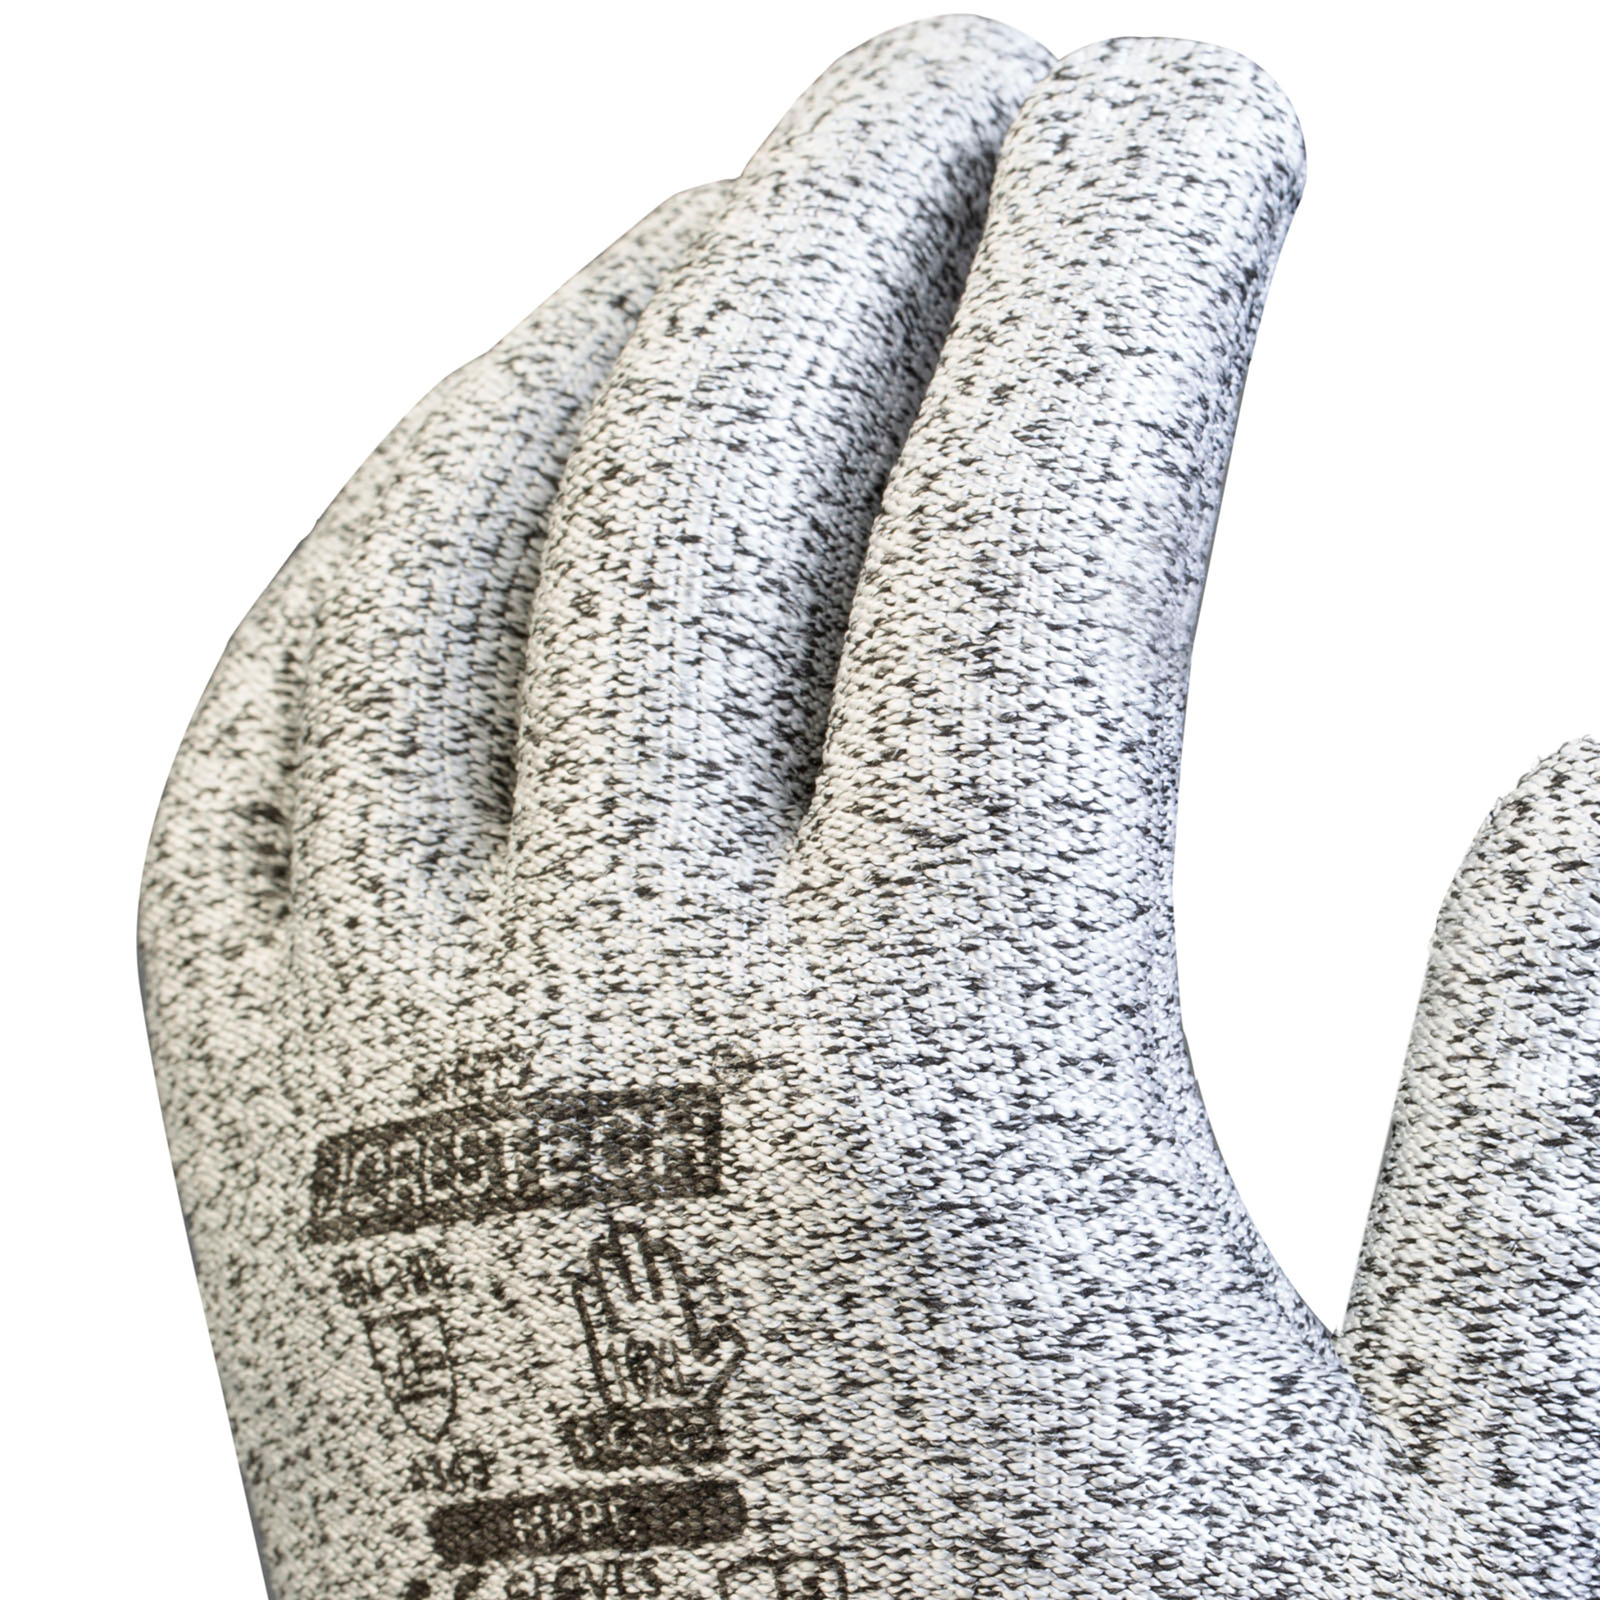 Cut-Resistant Multipurpose Work Gloves – Pack of 12